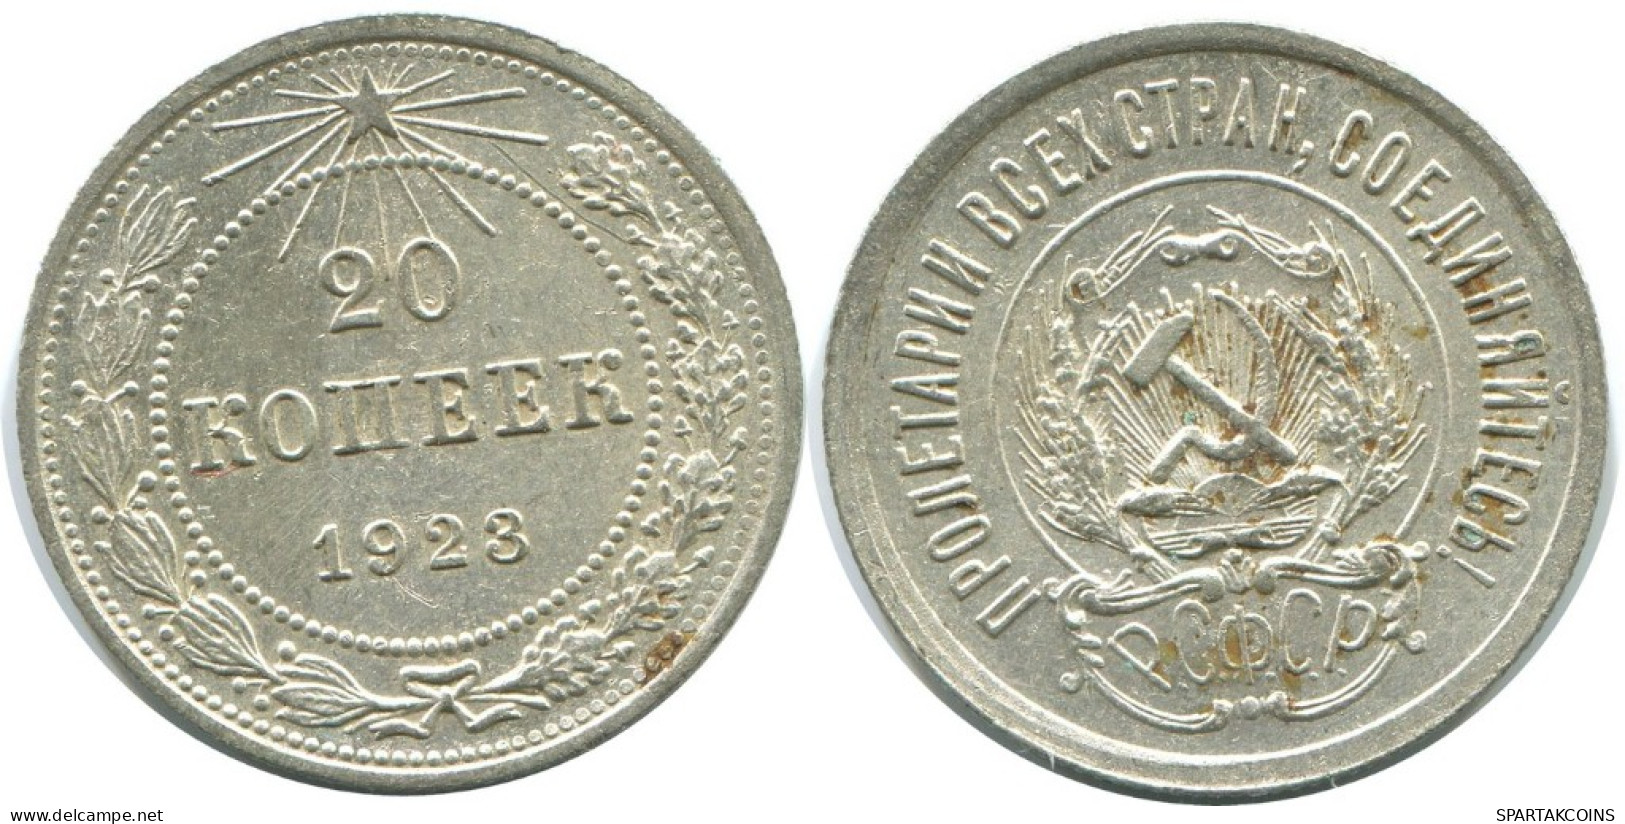 20 KOPEKS 1923 RUSSLAND RUSSIA RSFSR SILBER Münze HIGH GRADE #AF501.4.D.A - Russland